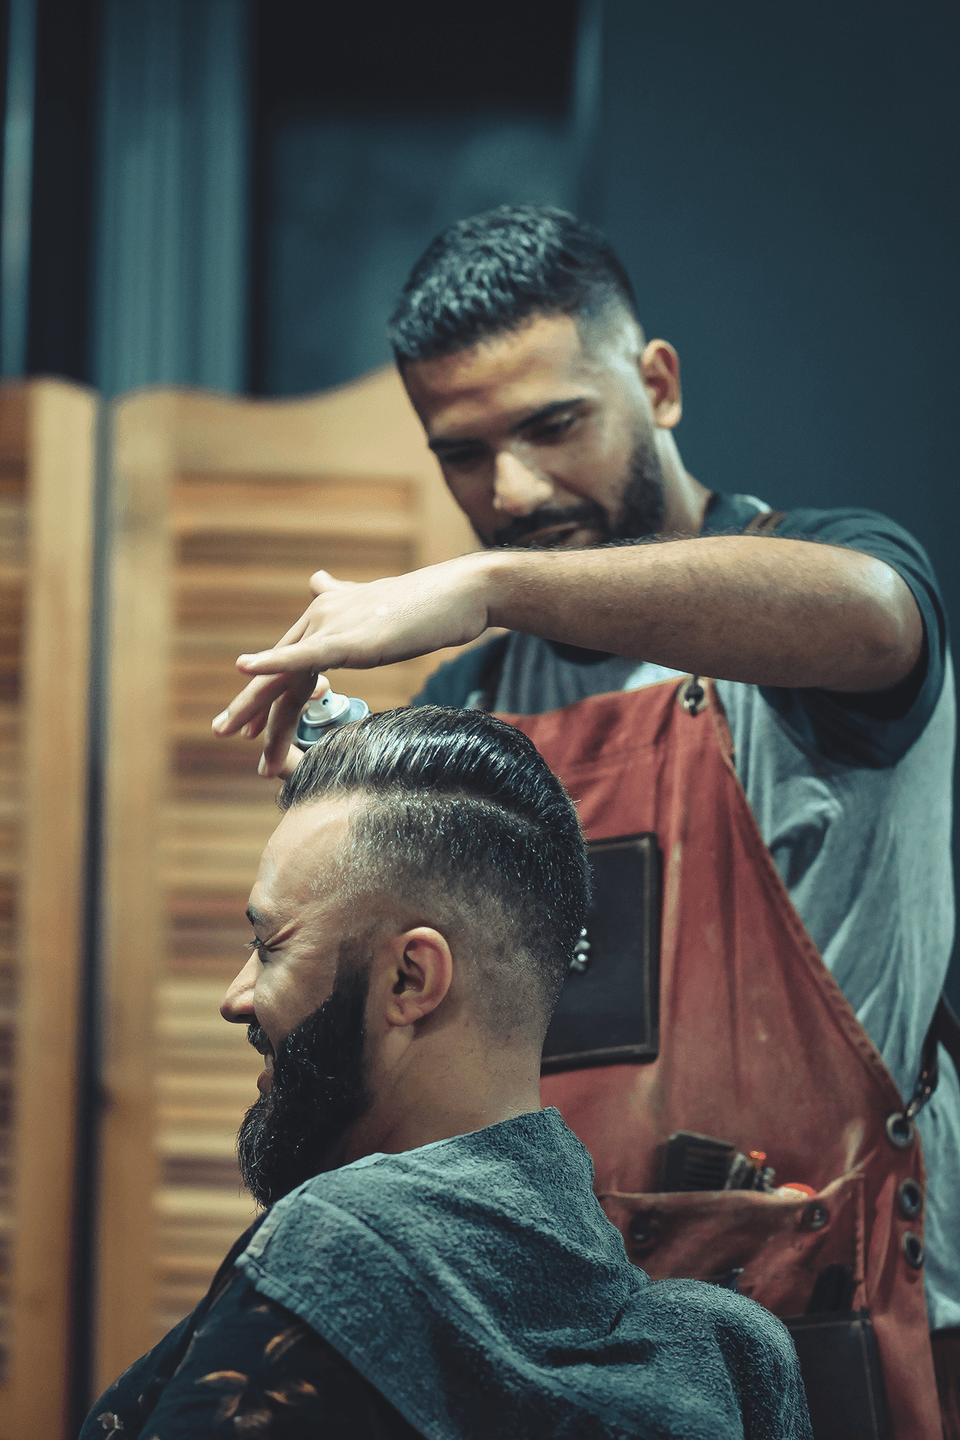 barber cutting a customer's hair